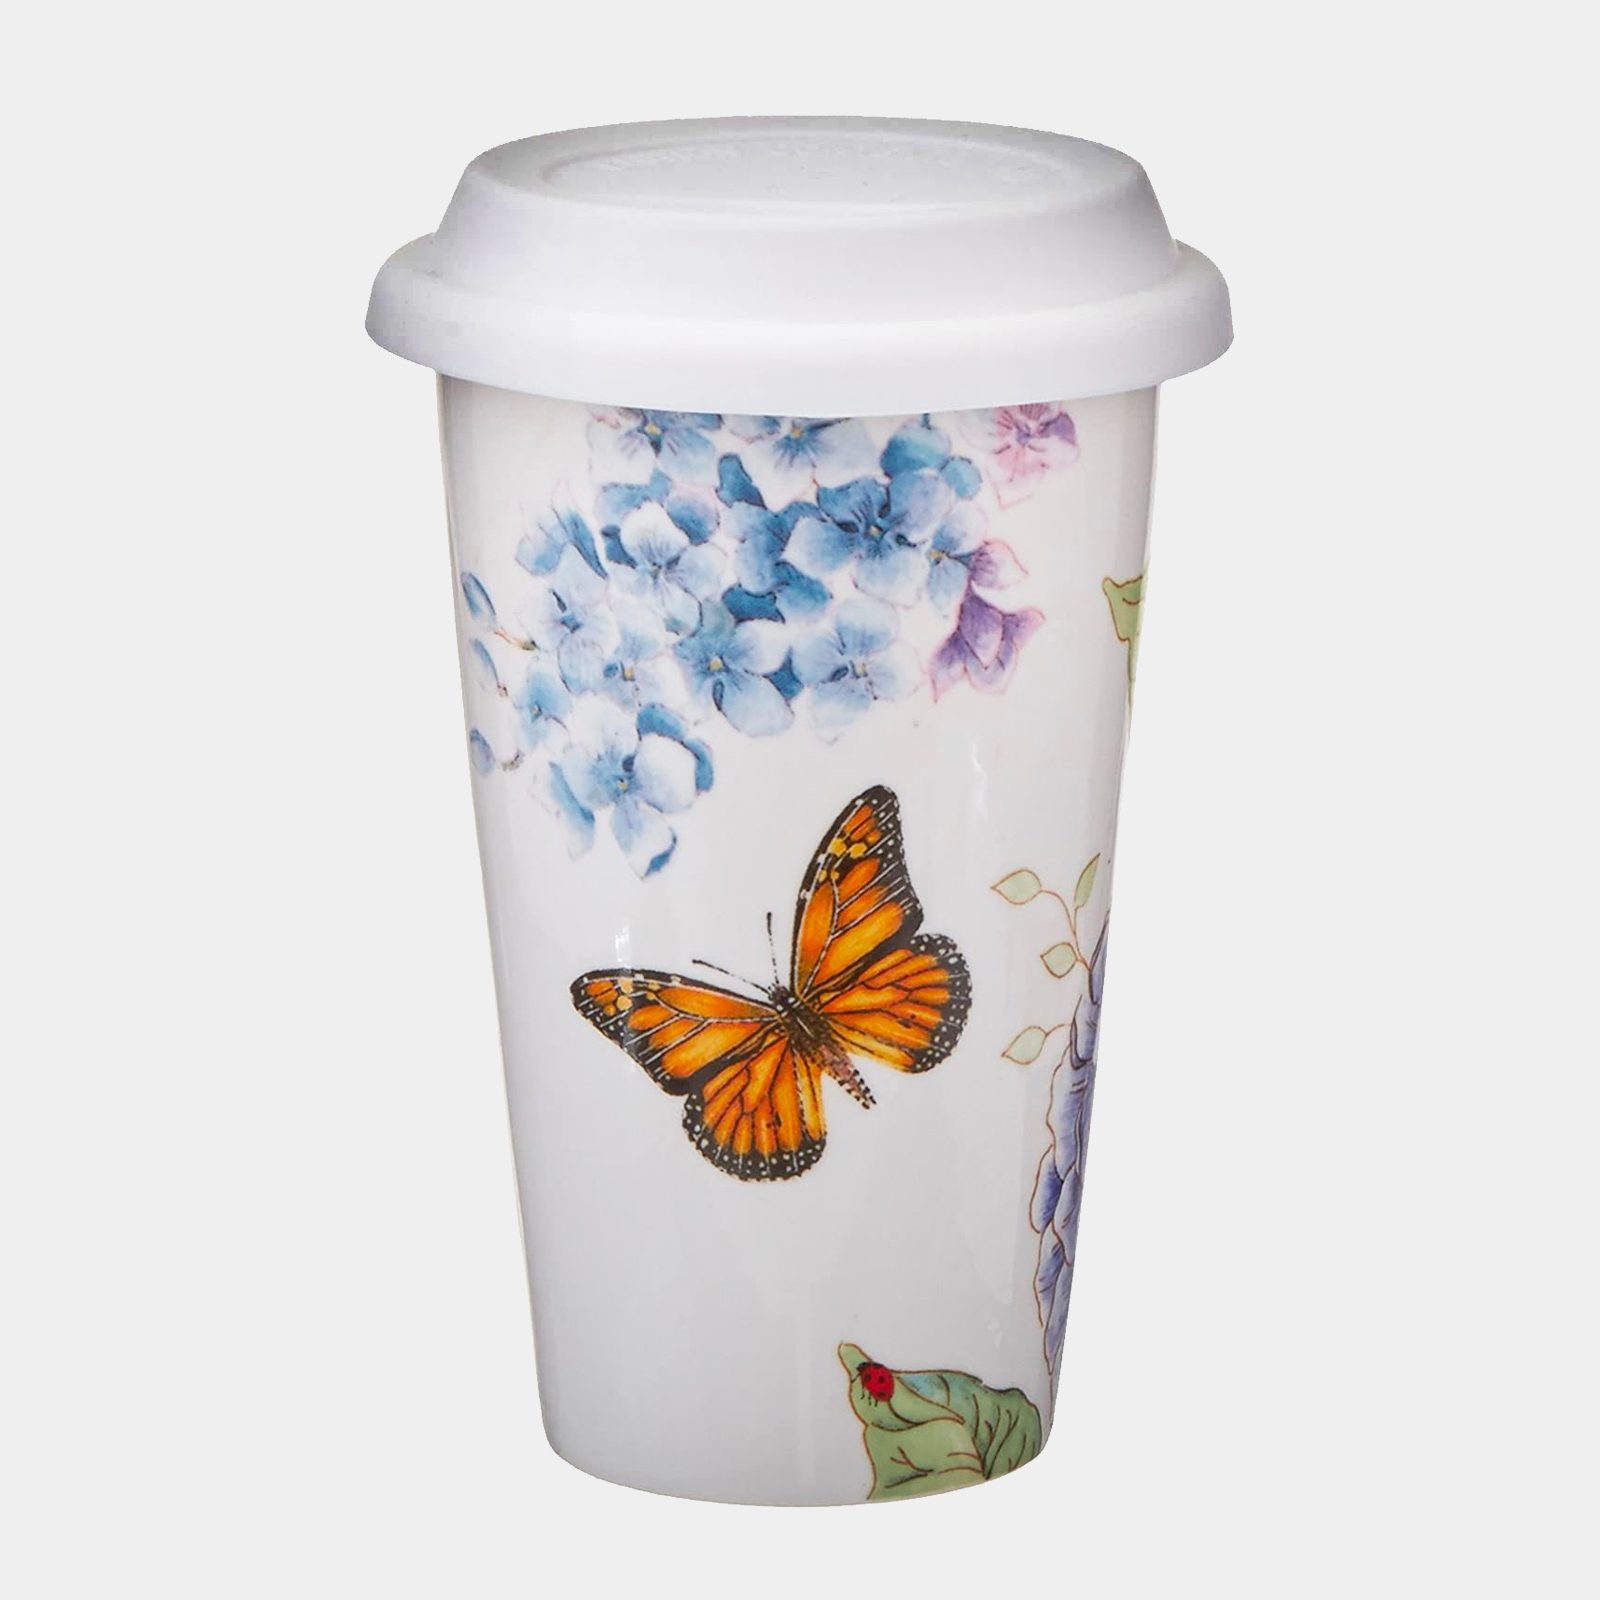 https://www.rd.com/wp-content/uploads/2022/05/RD-15-Best-Reusable-Coffee-Cups-Ecomm-Lenox.jpg?fit=700%2C700